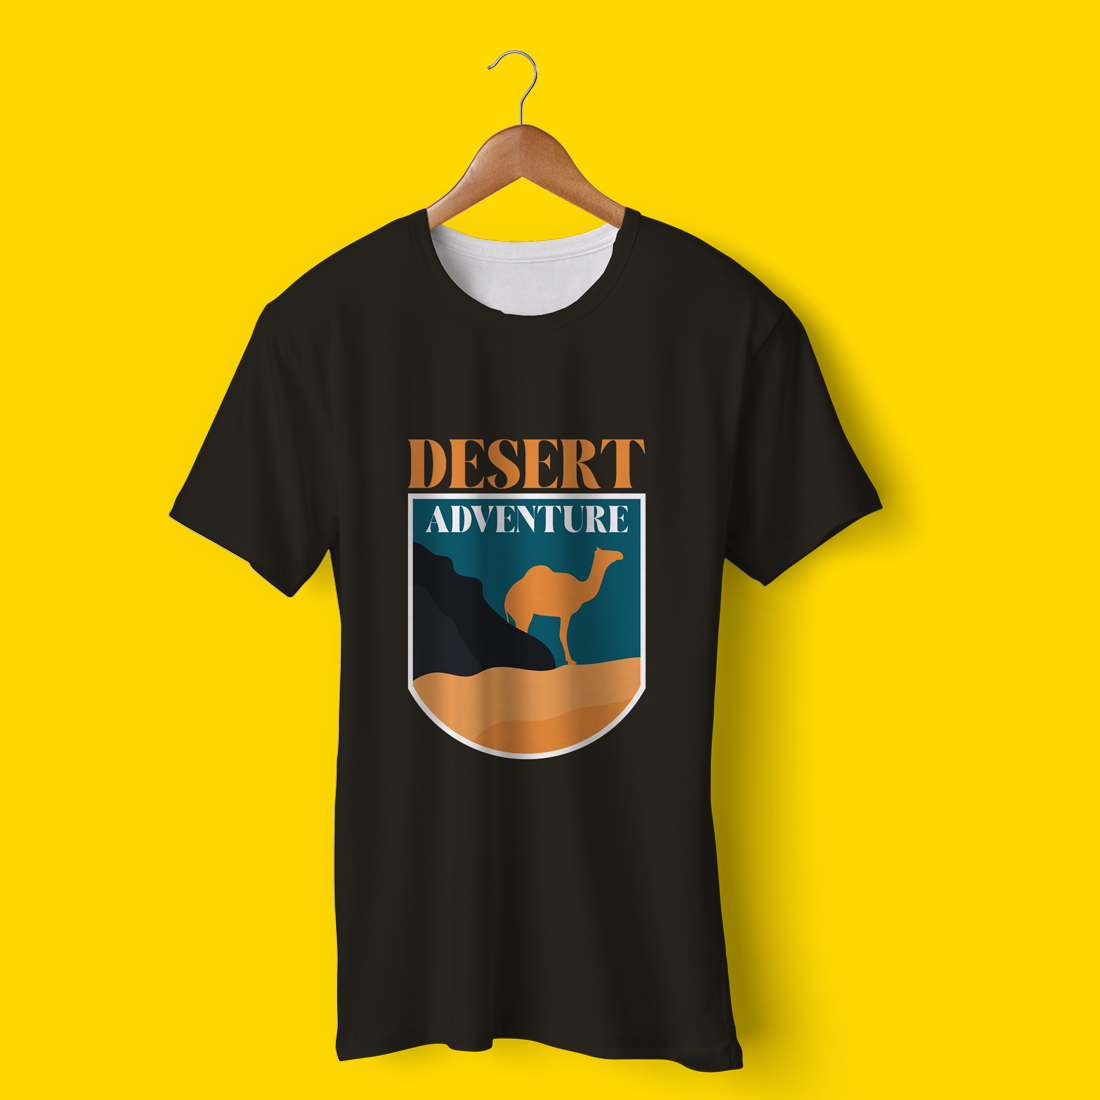 Black t - shirt with a desert adventure design on it.